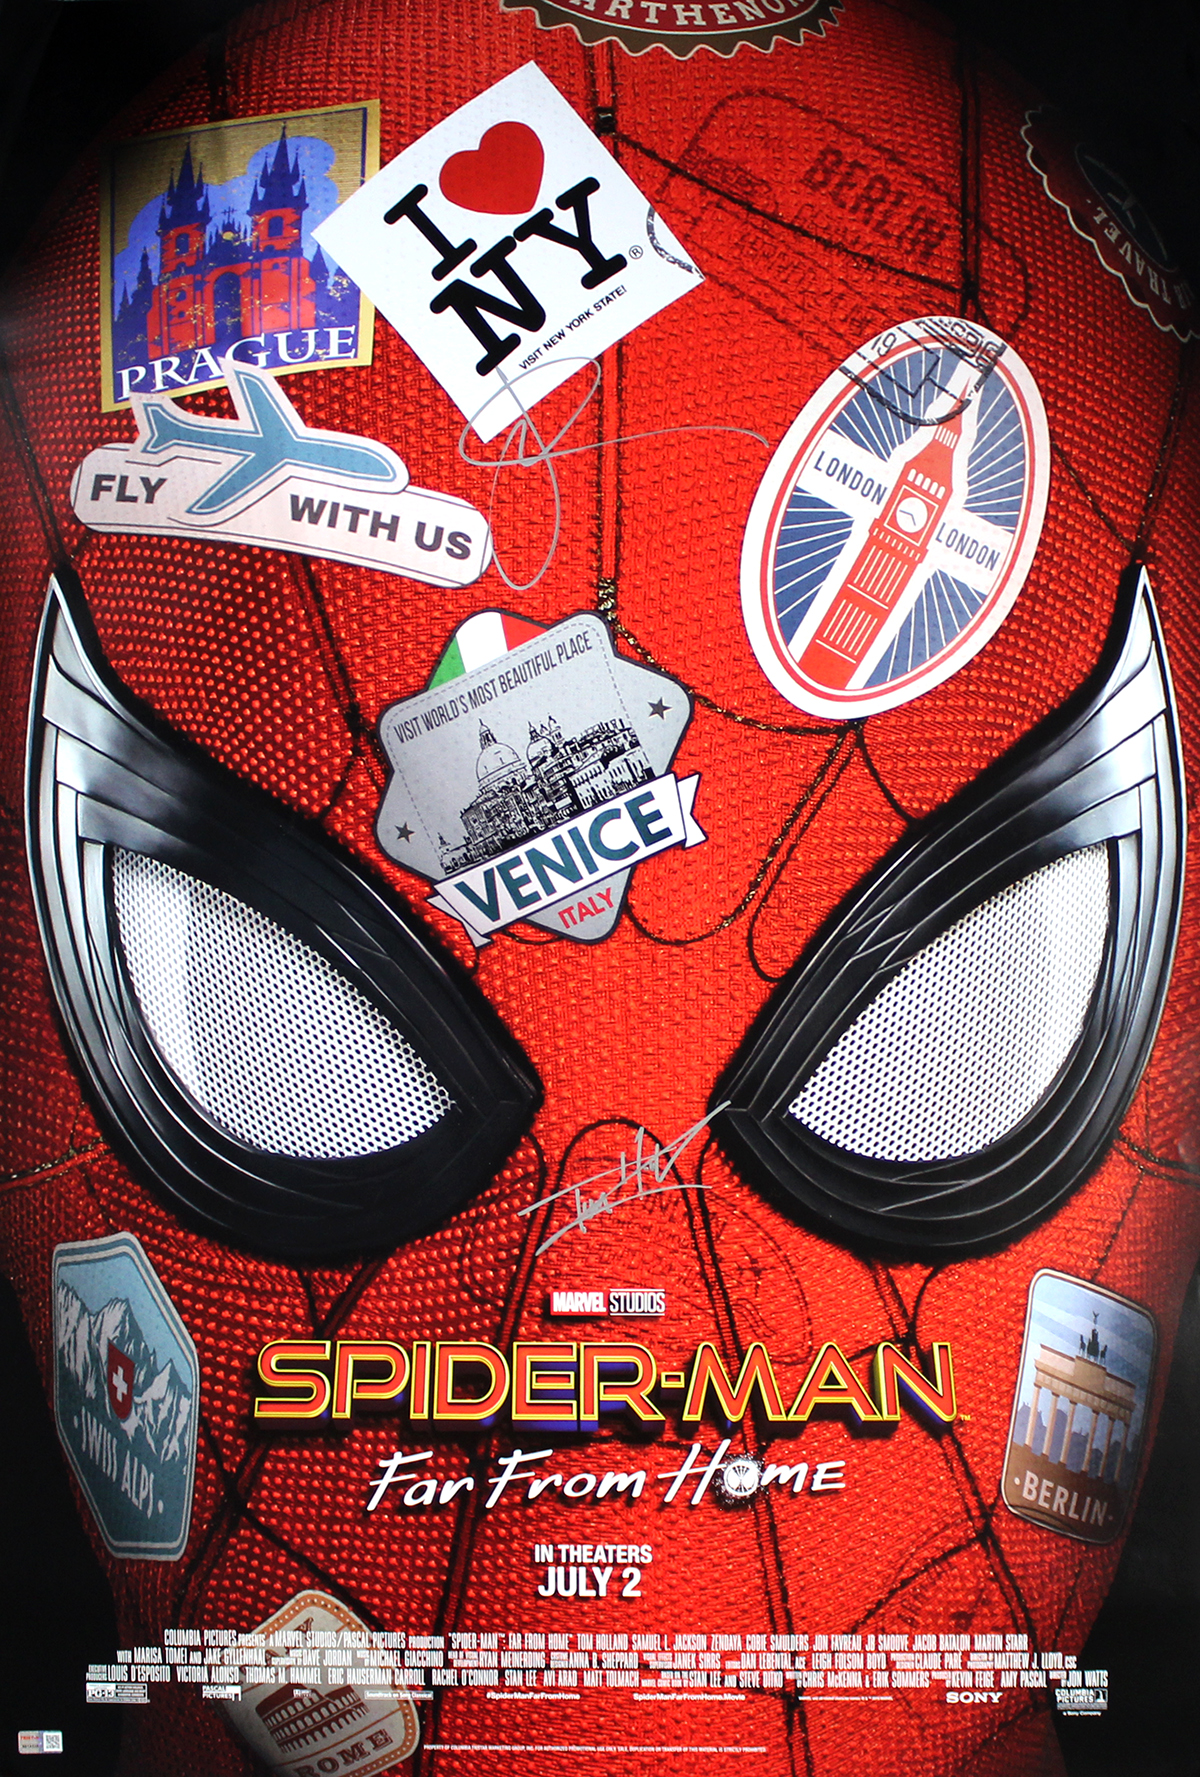 Spiderman Far From Home.jpg